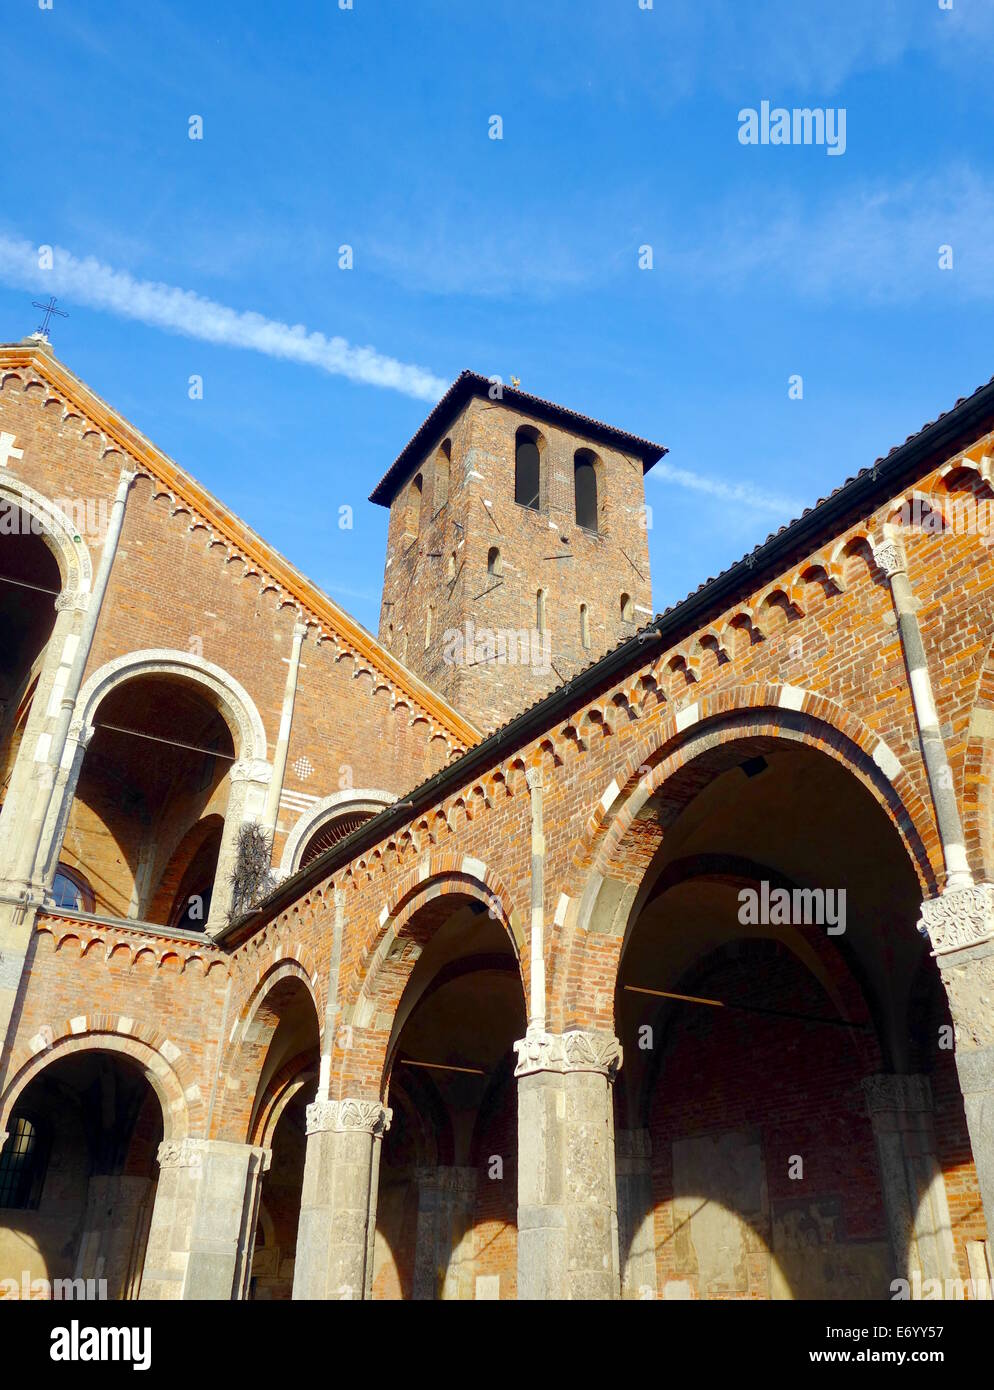 The exterior of the Basilica di Sant'Ambrogio in Milan, Italy Stock Photo